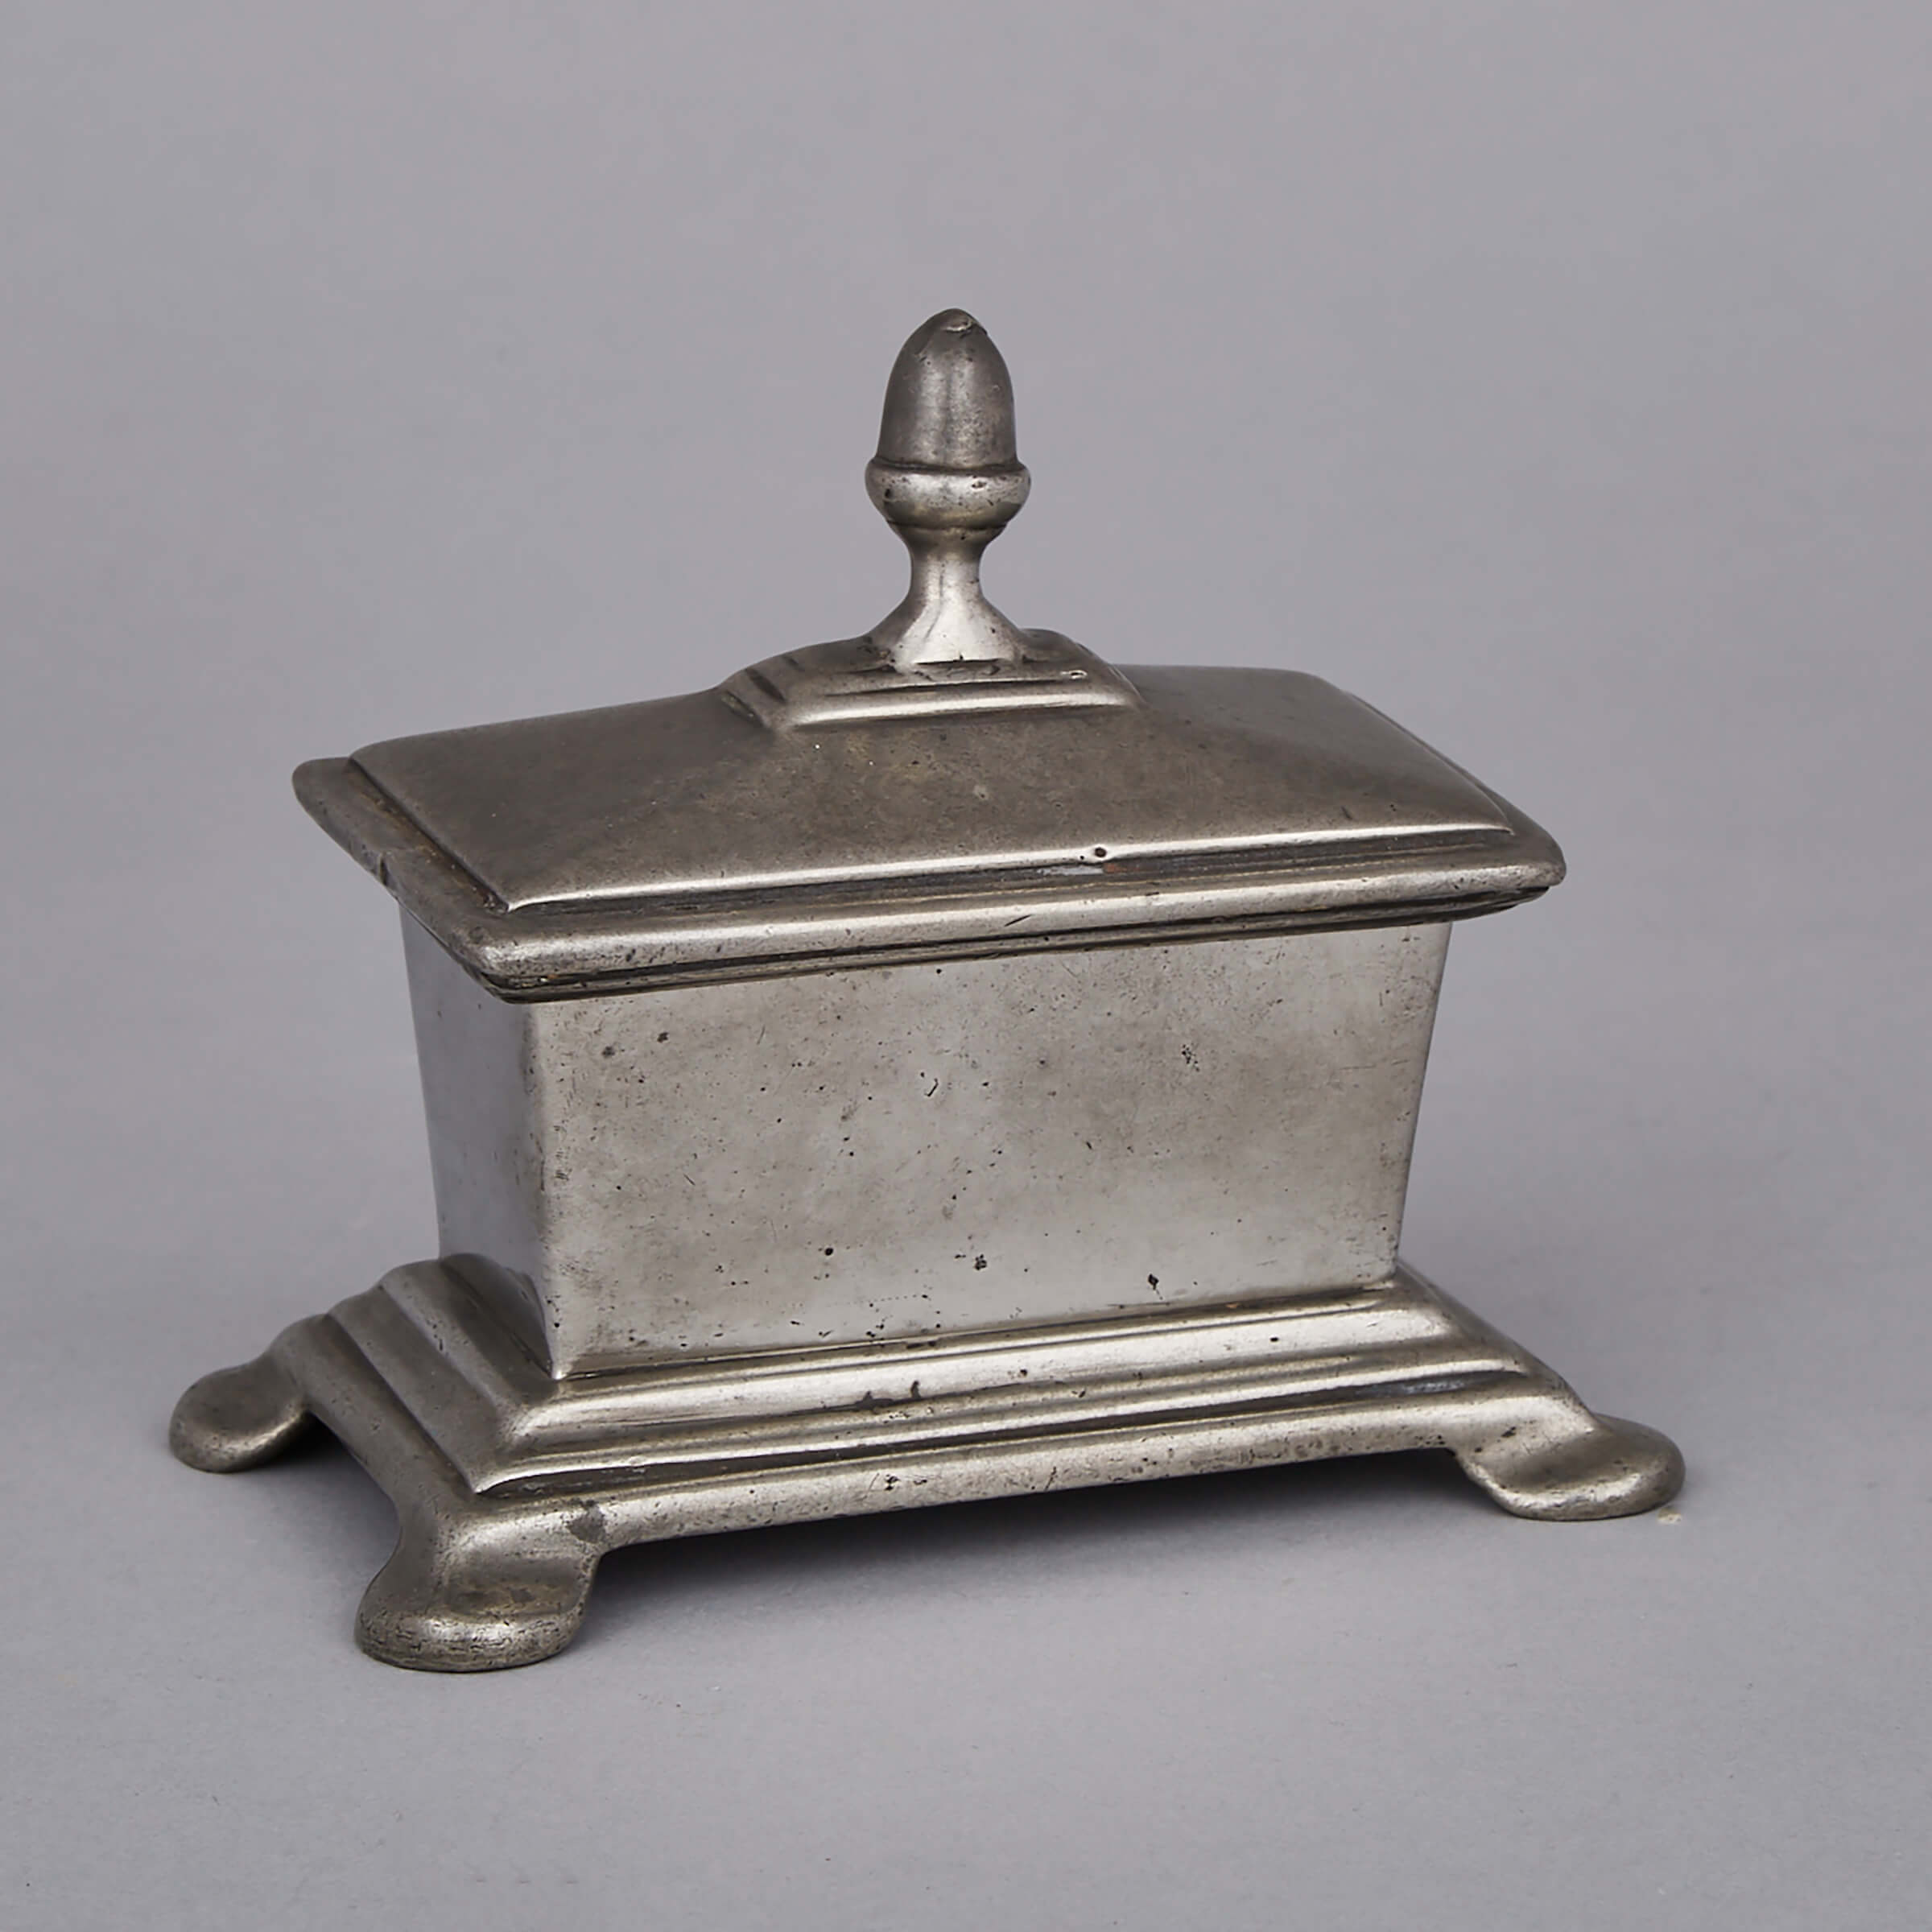 English Pewter Table Snuff Box, 19th century